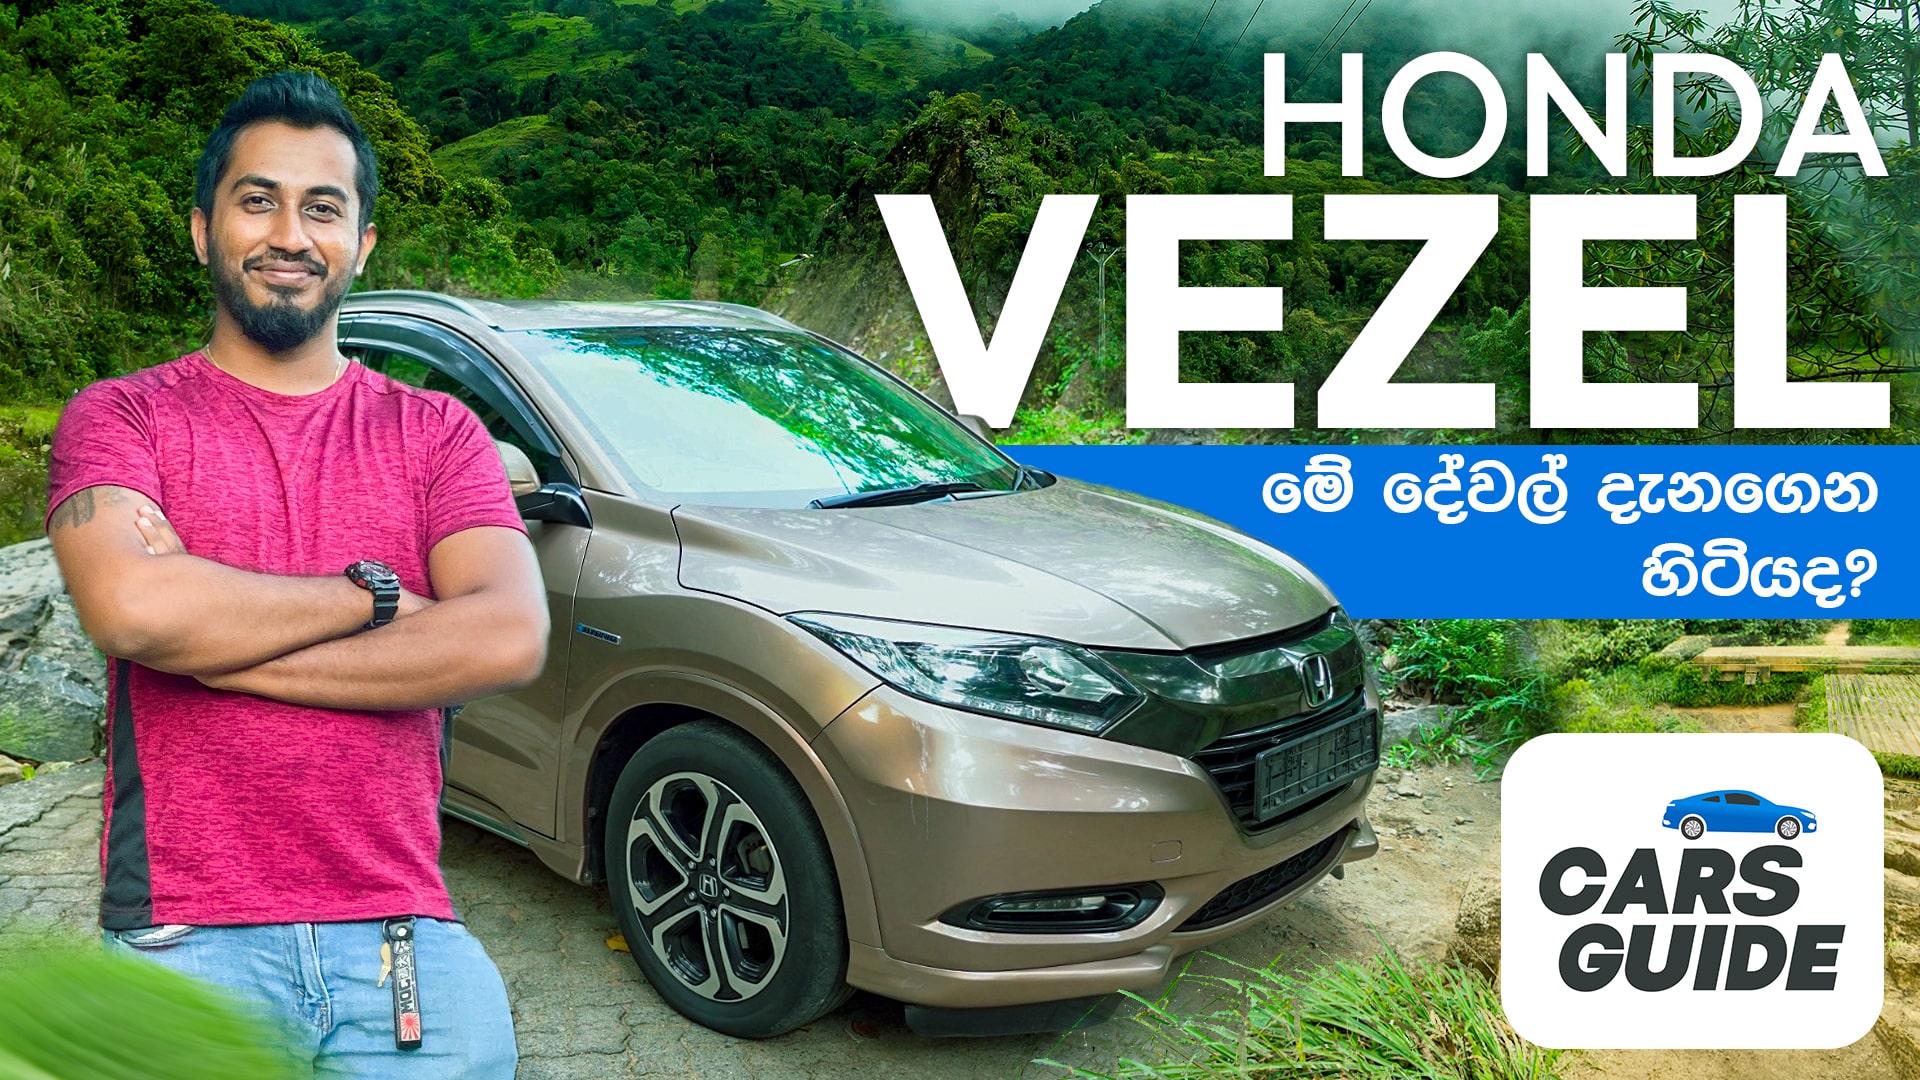 Honda Vezel Review